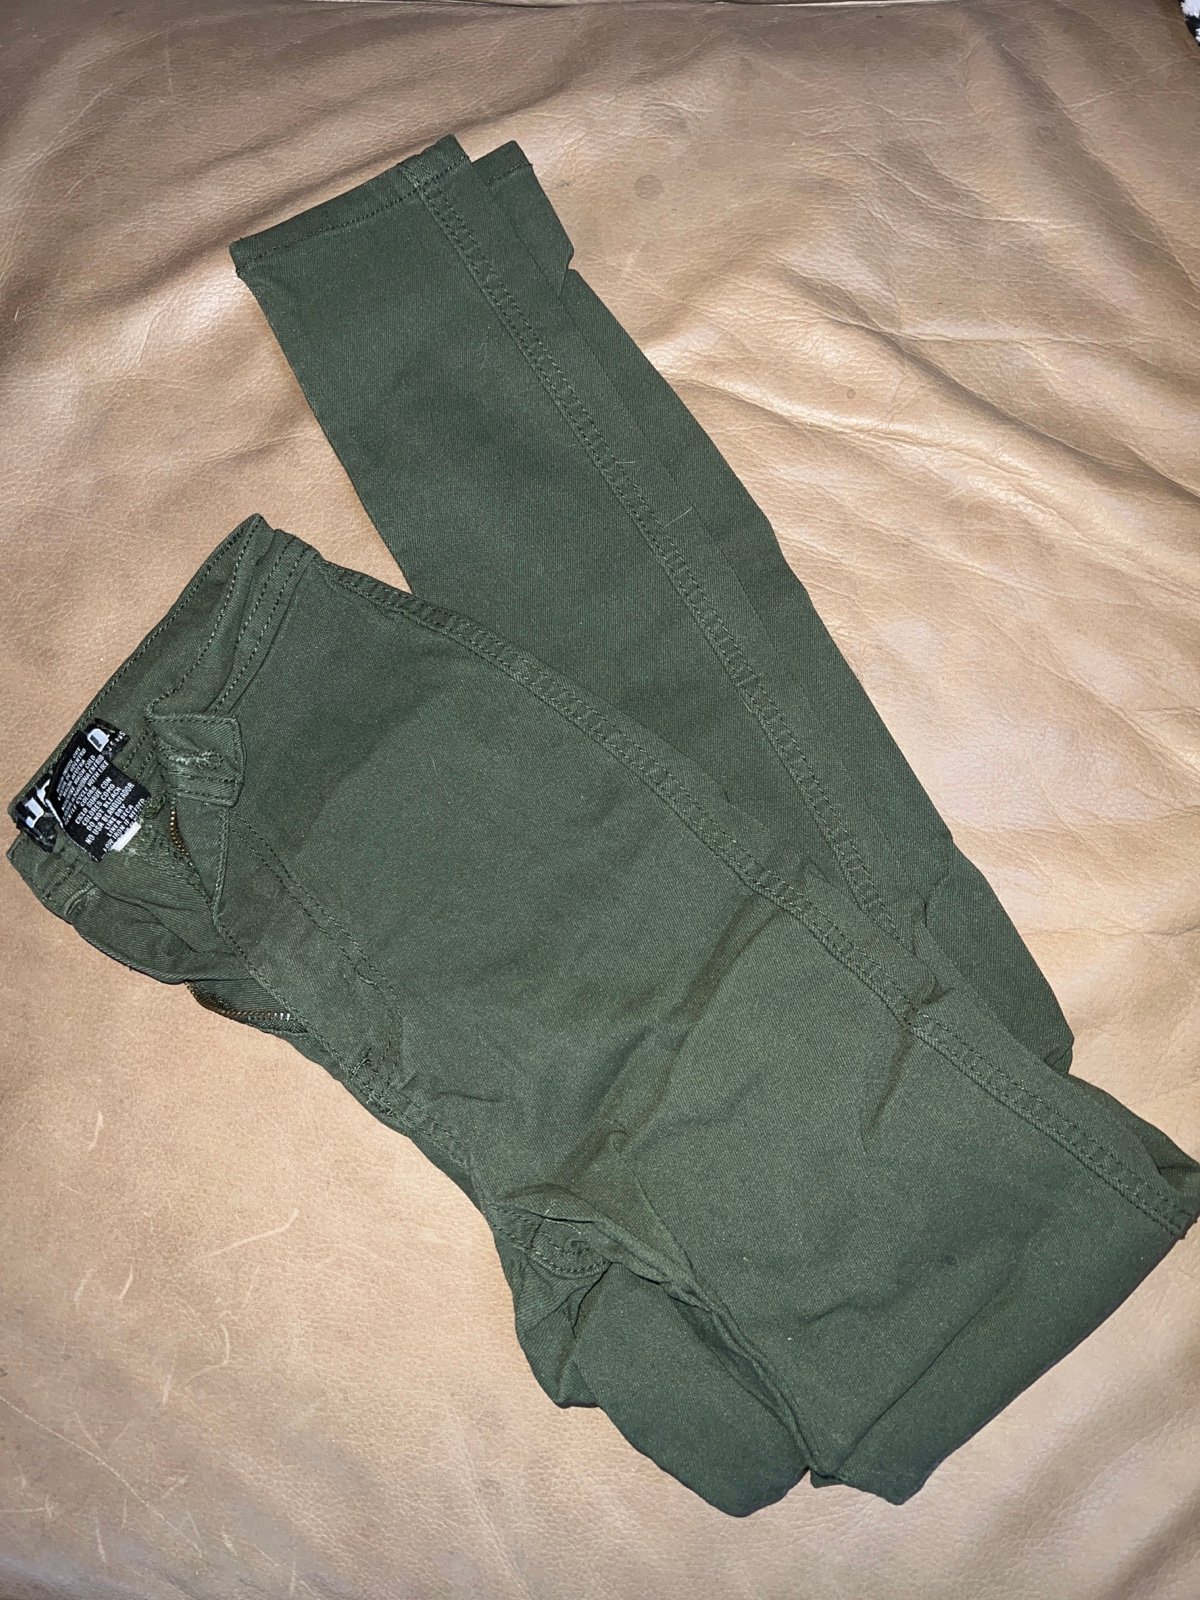 Latest  Green pants KTixCyimx online store